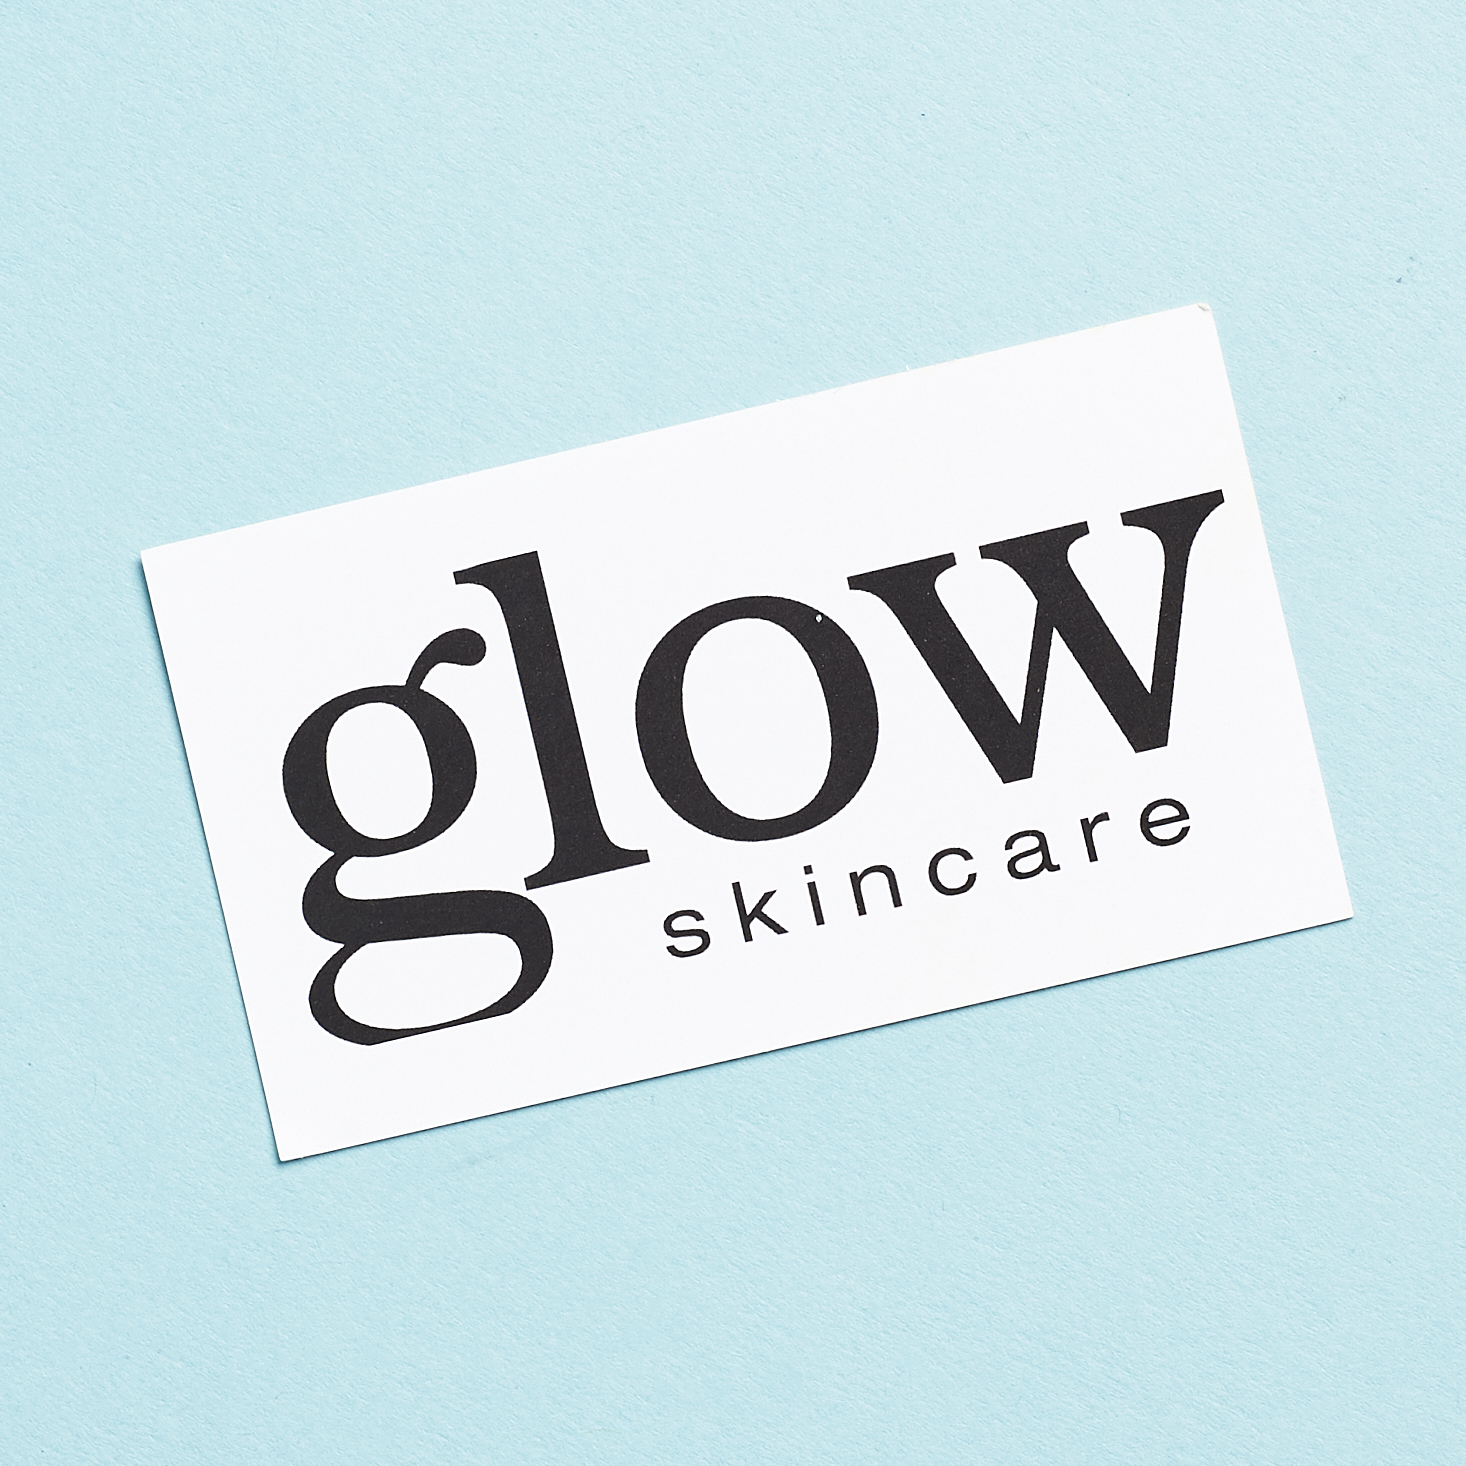 glow skincare info card